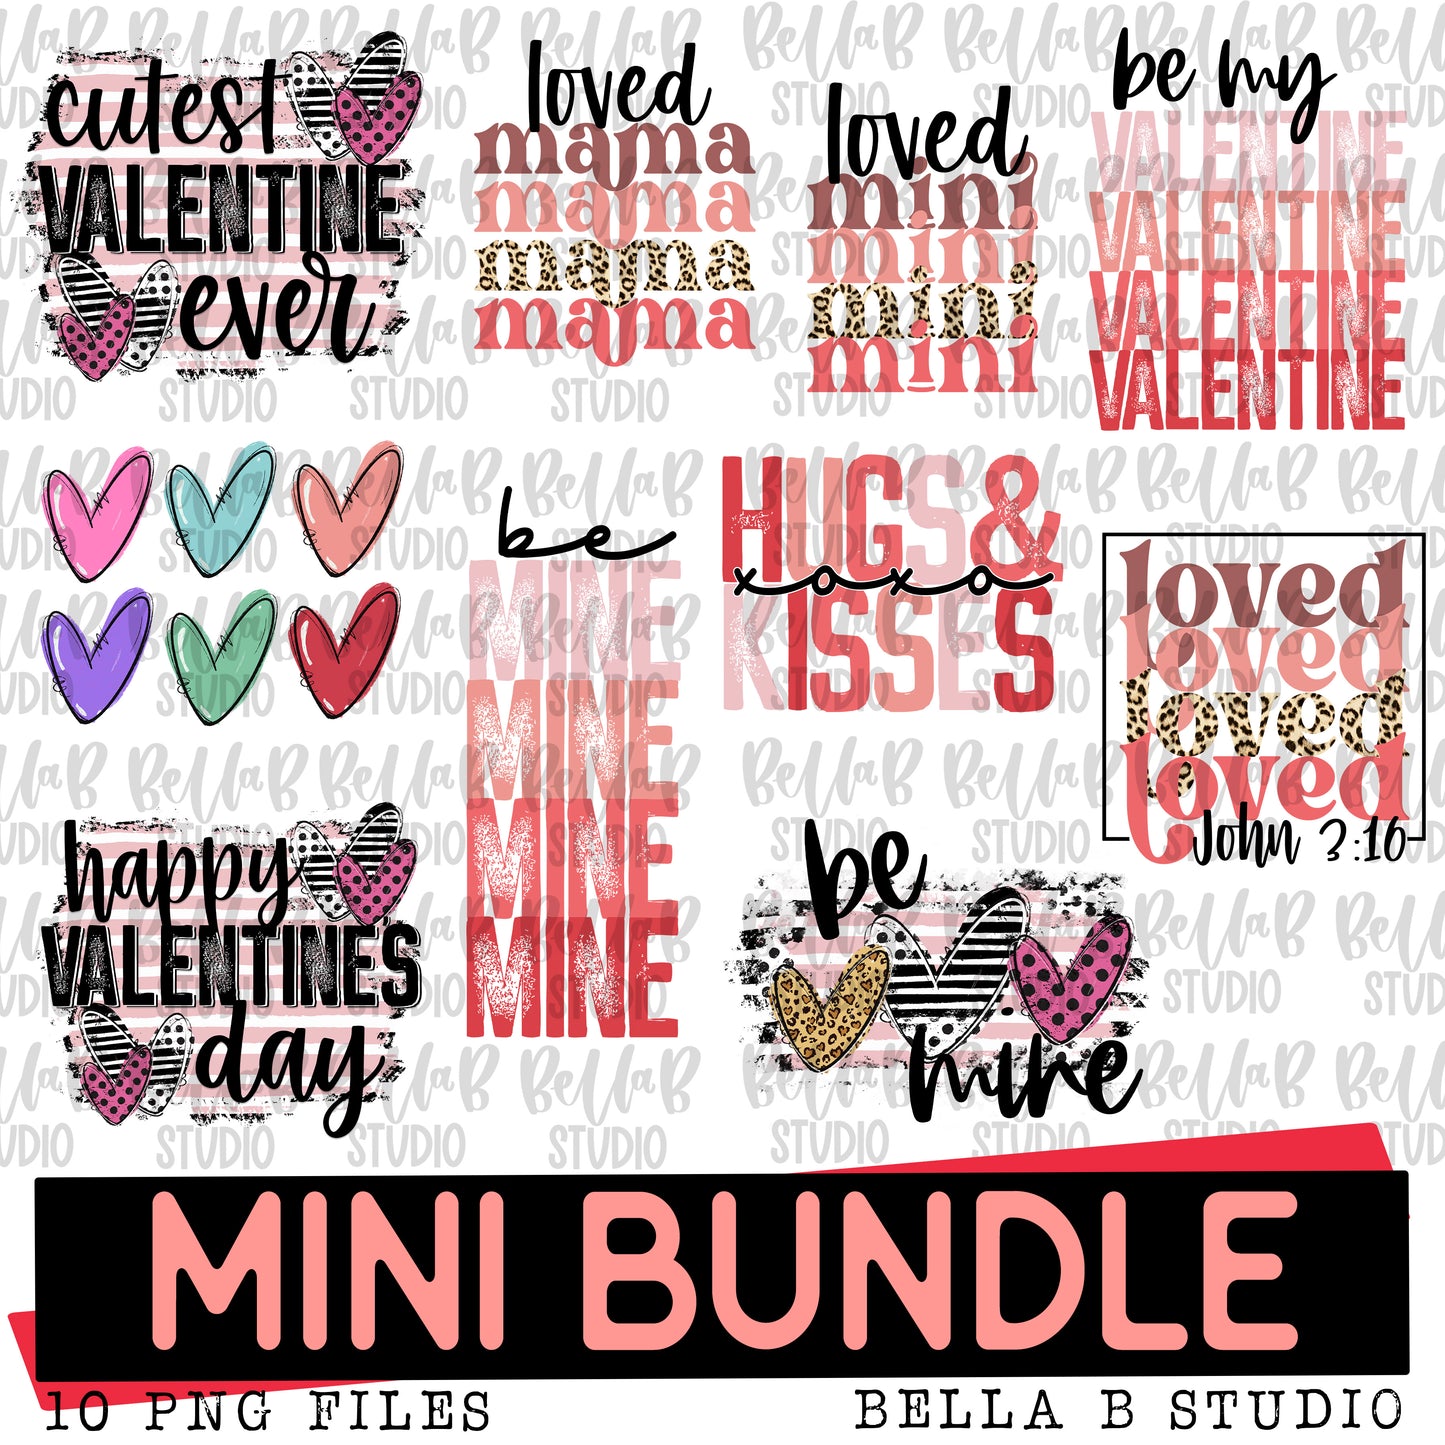 Mini Bundle #4 - Valentine's Day